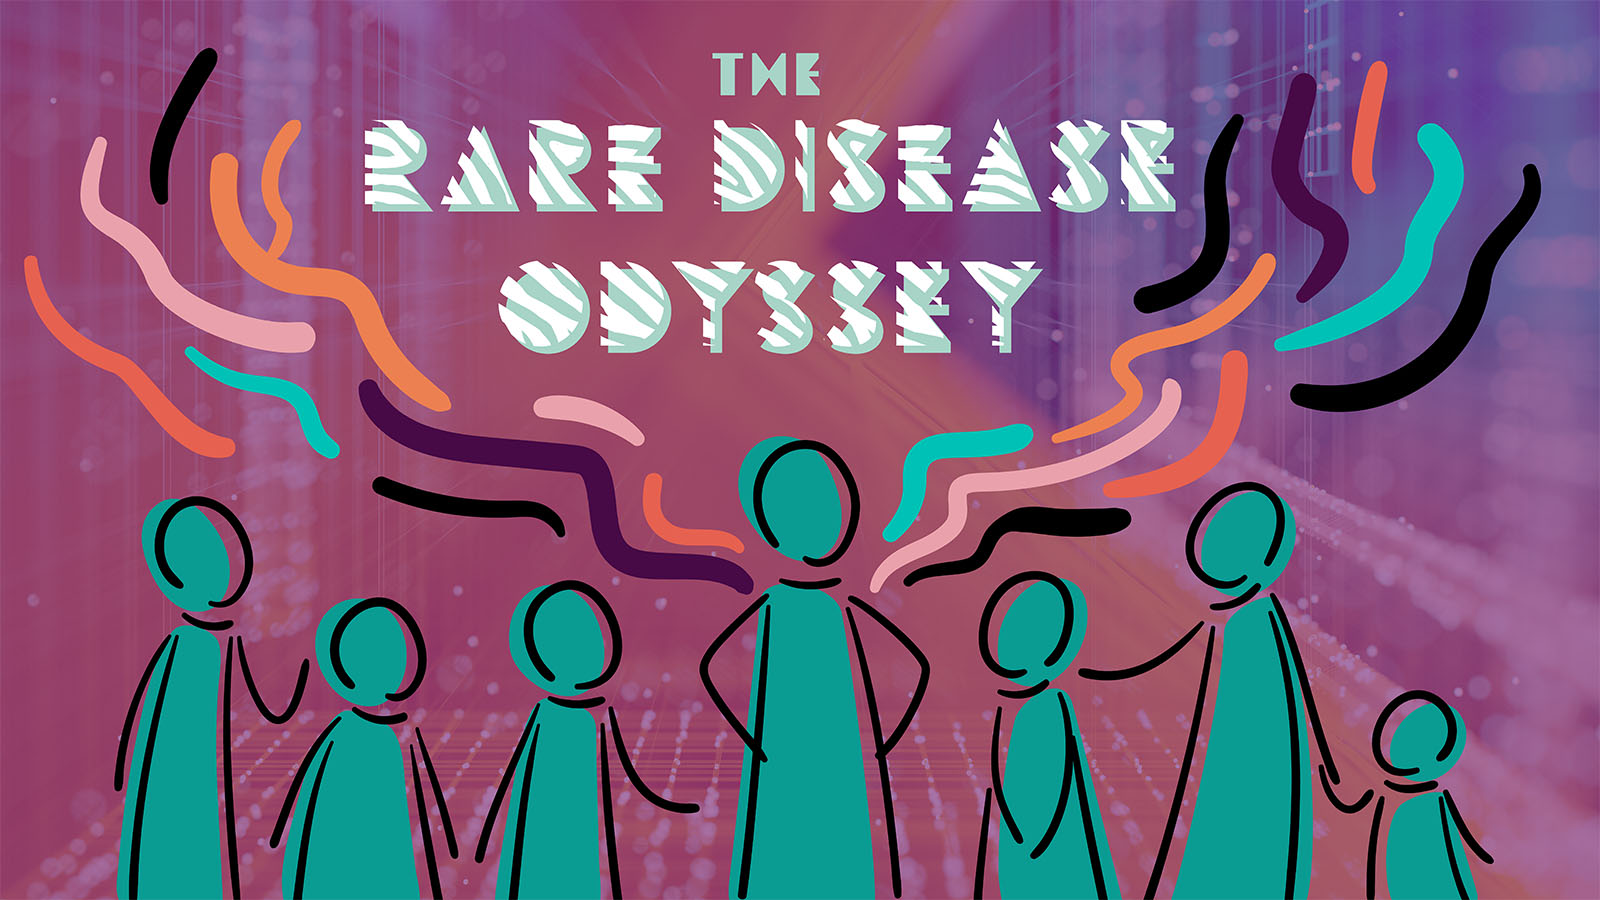 The master image for the Rare Disease Odyssey, symbolizing community